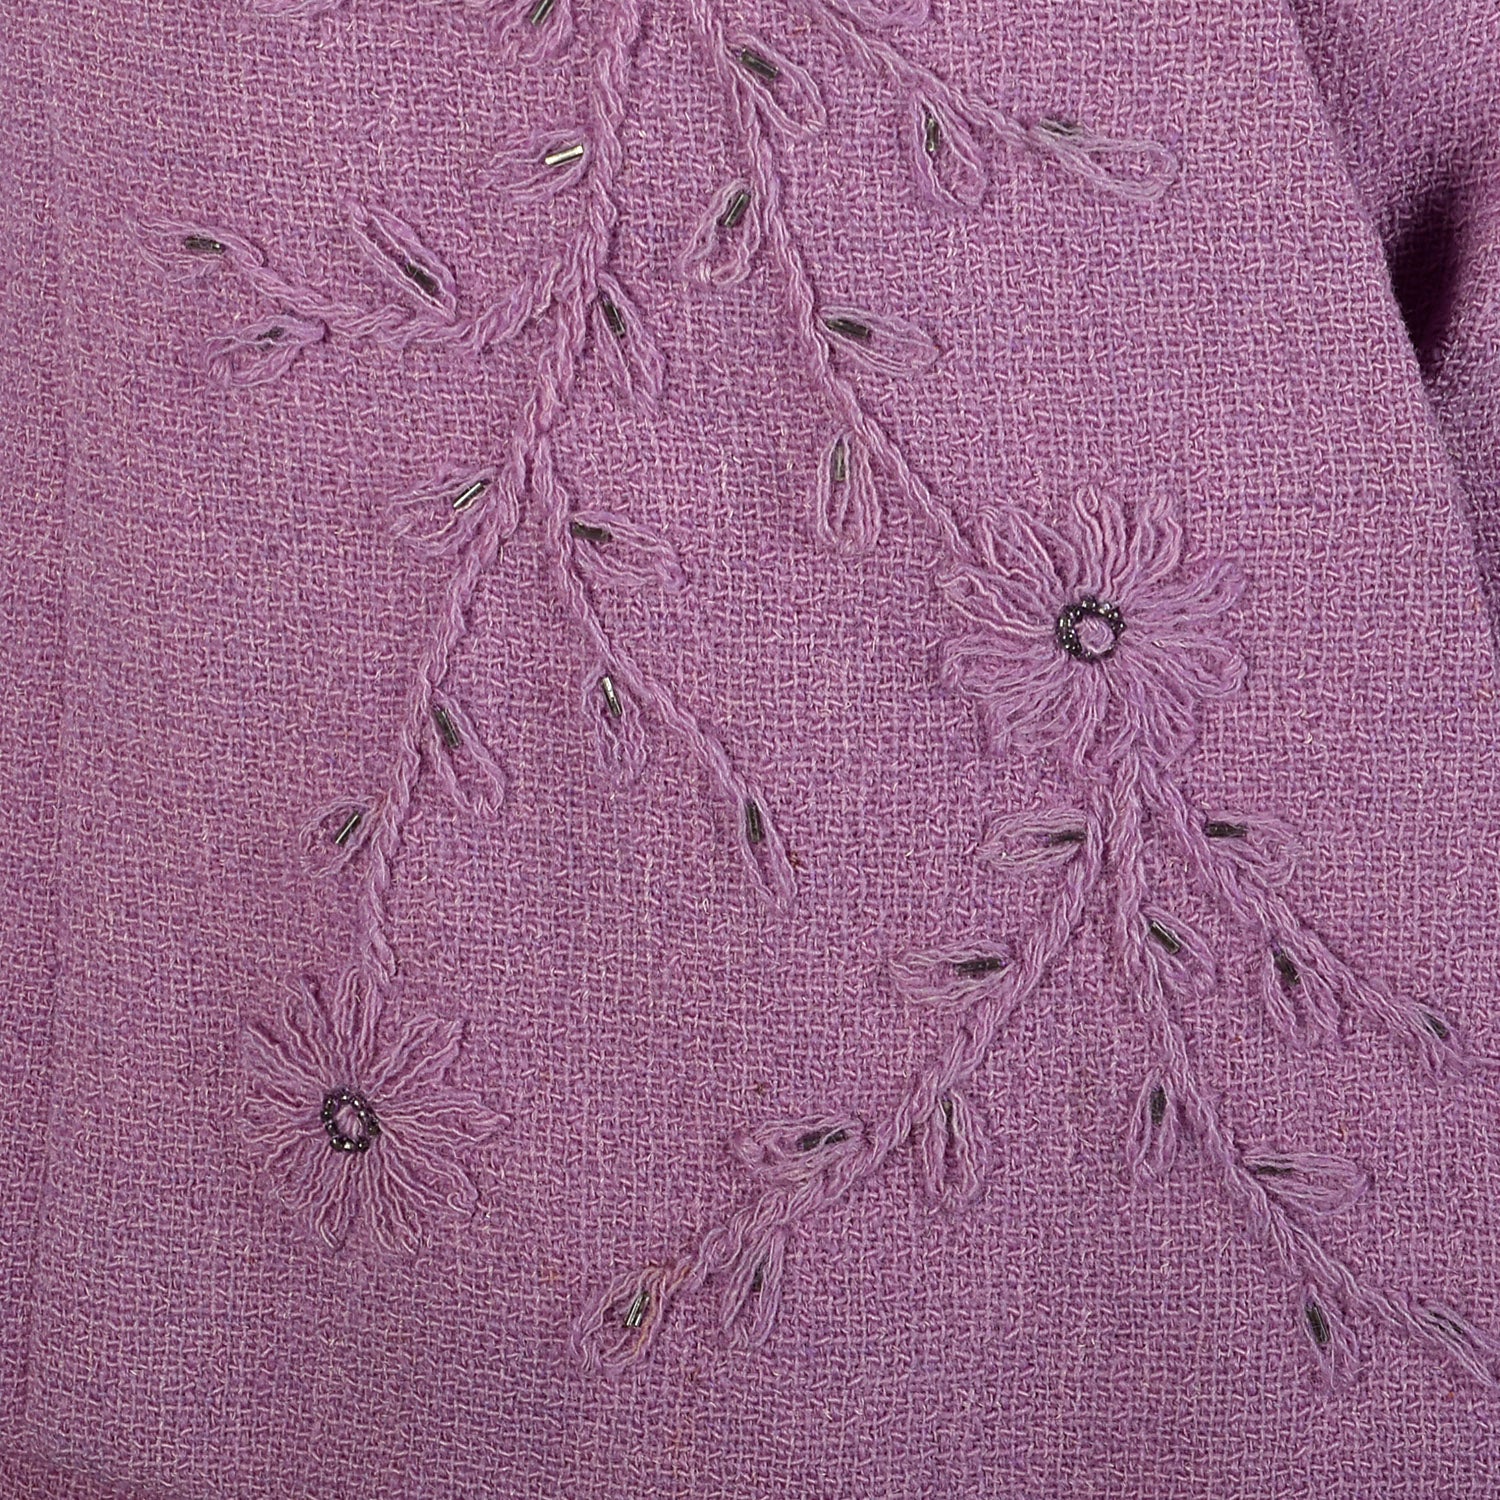 XL 1960s Set Purple Tweed Autumn Jacket Lilac Day Dress Ensemble